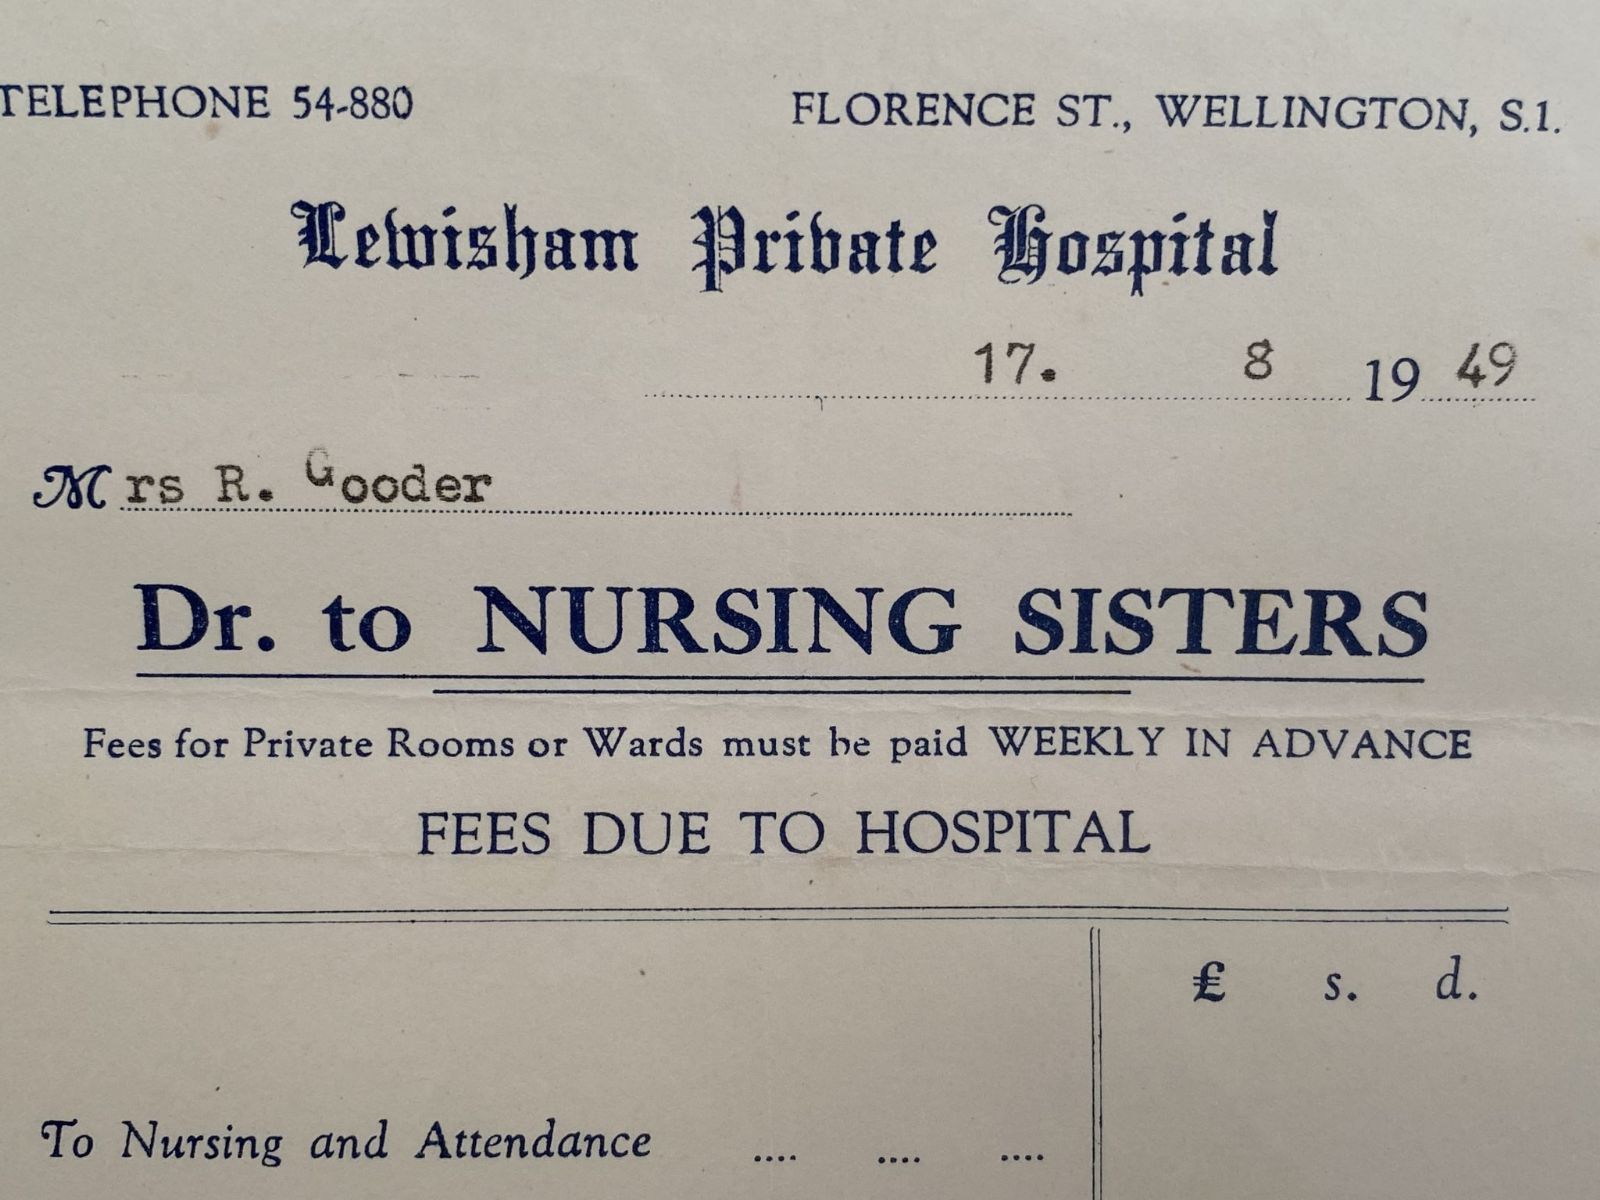 OLD INVOICE / RECEIPT: Lewisham Private Hospital, Wellington 1949